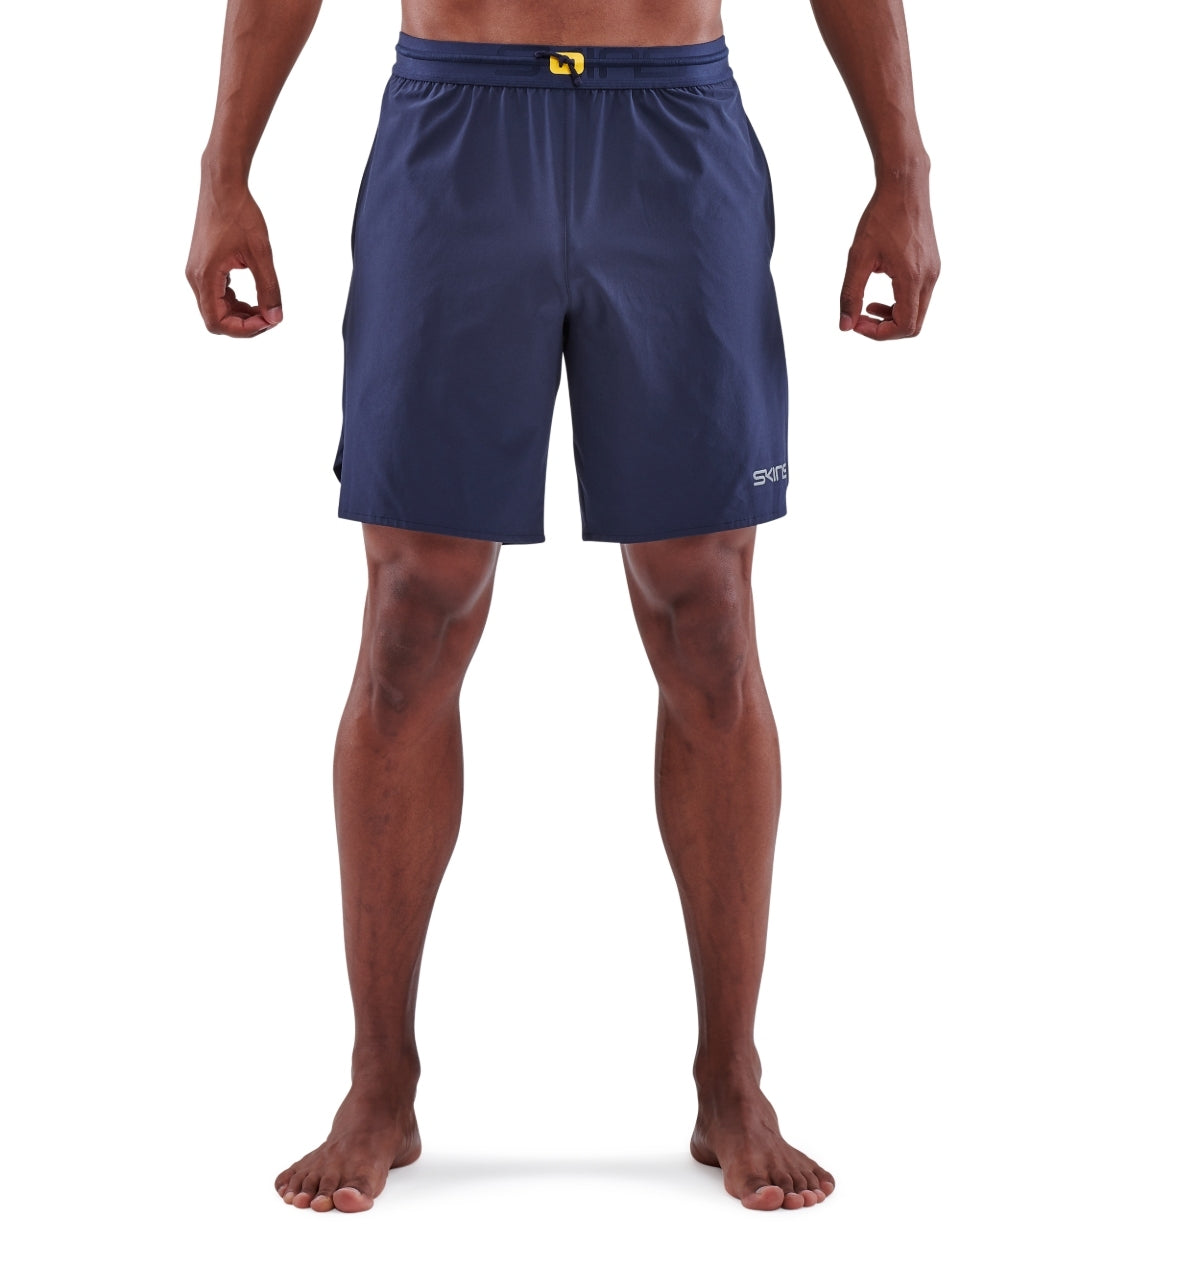 SKINS SERIES-3 Men's X-Fit Shorts Navy Blue